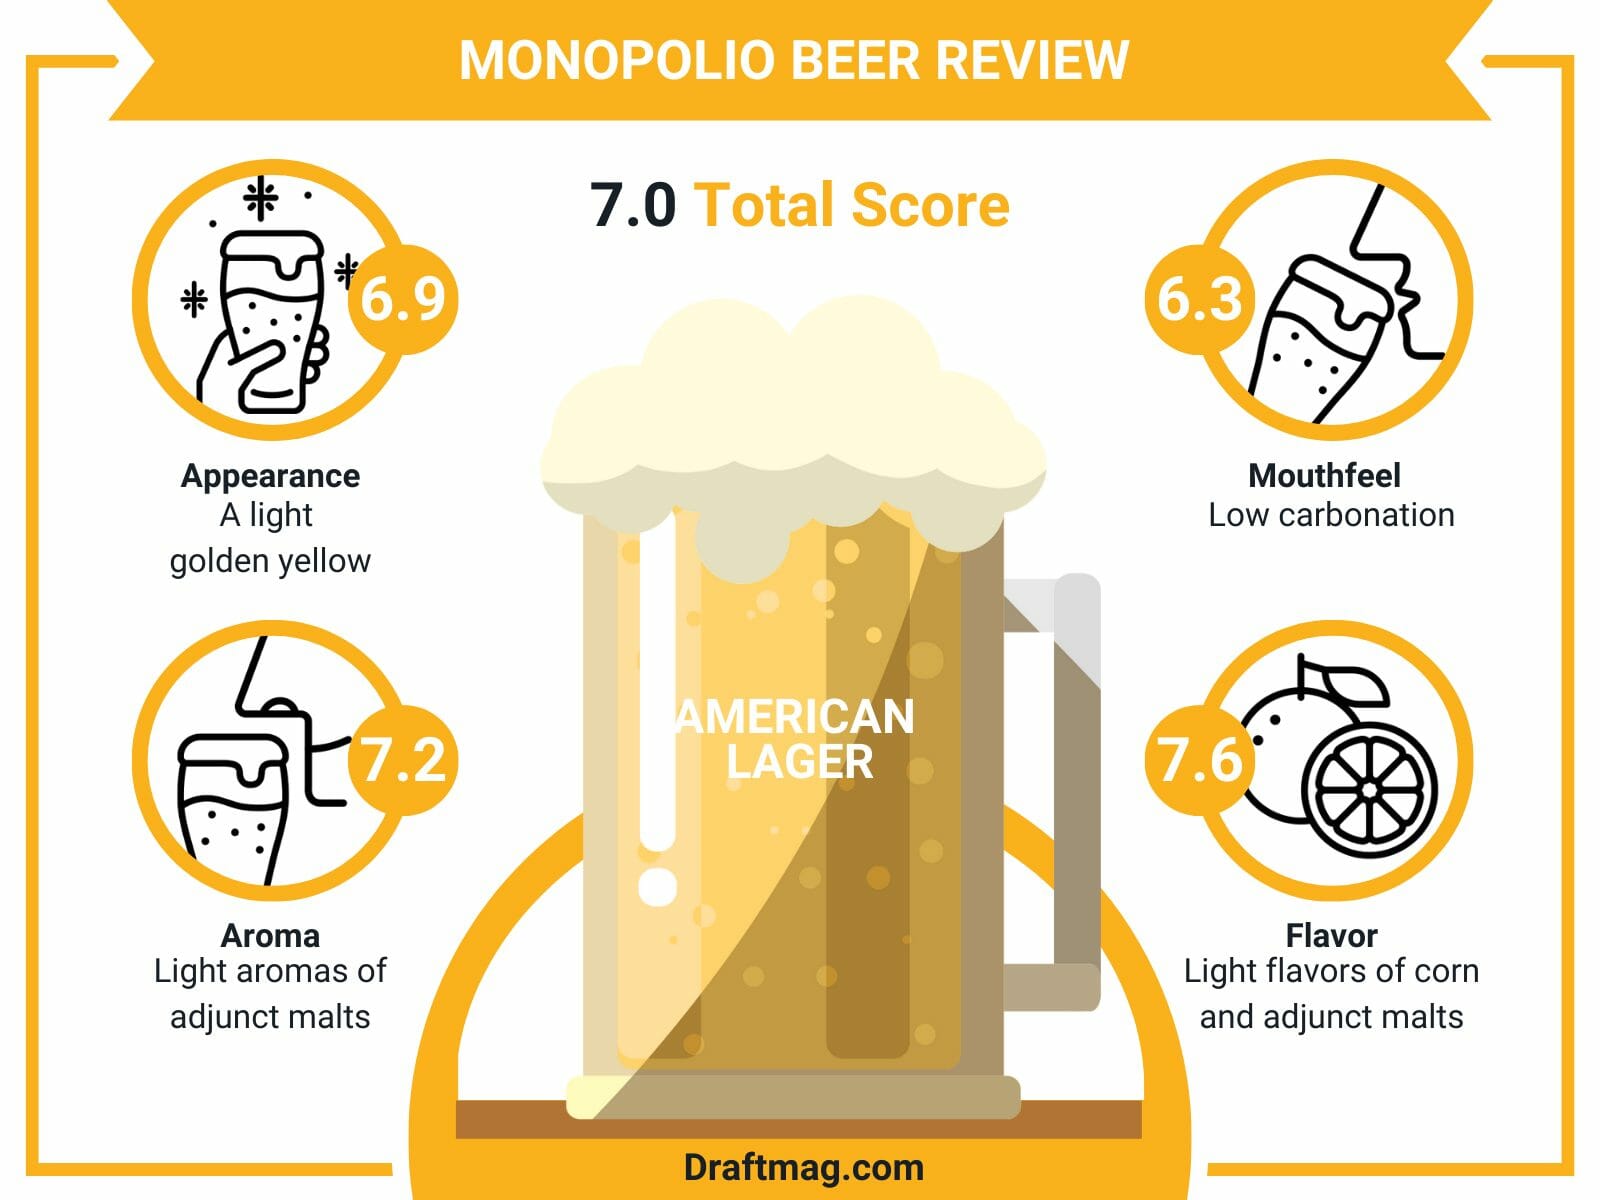 Monopolio beer review infographics